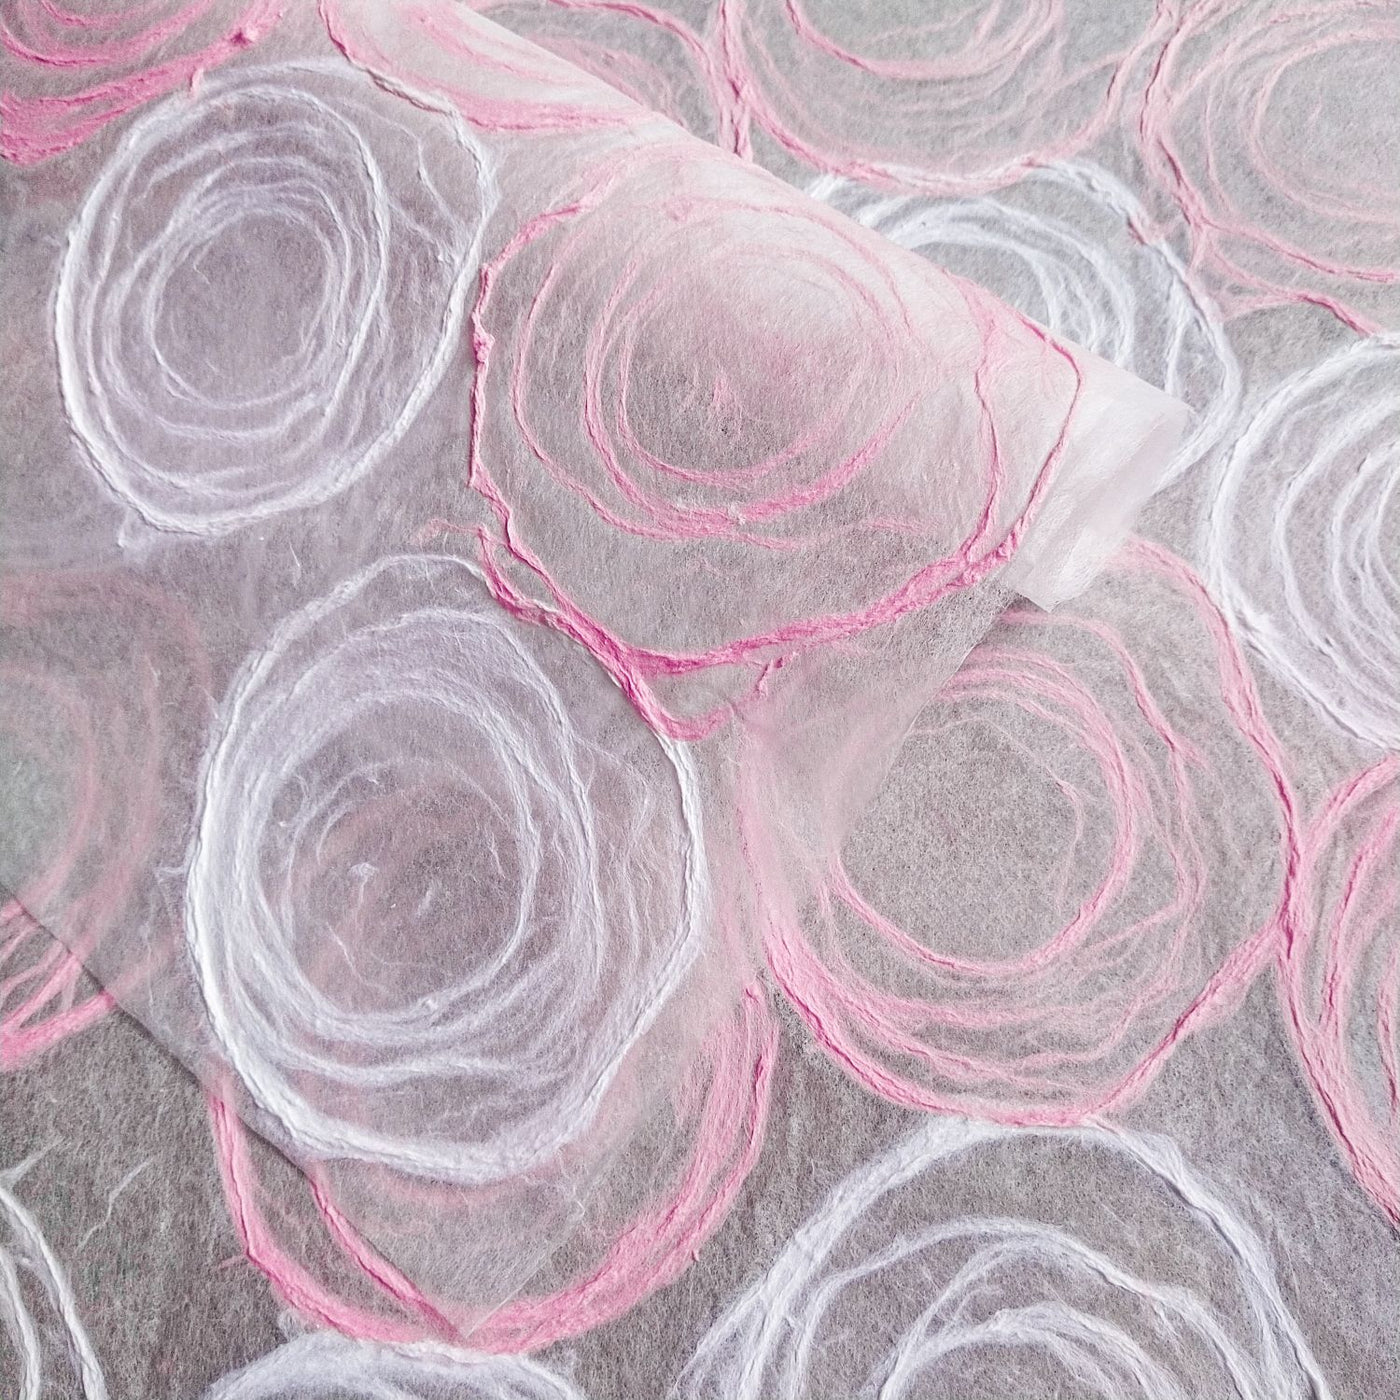 Handmade Rose Kozo Paper (Pink and White)